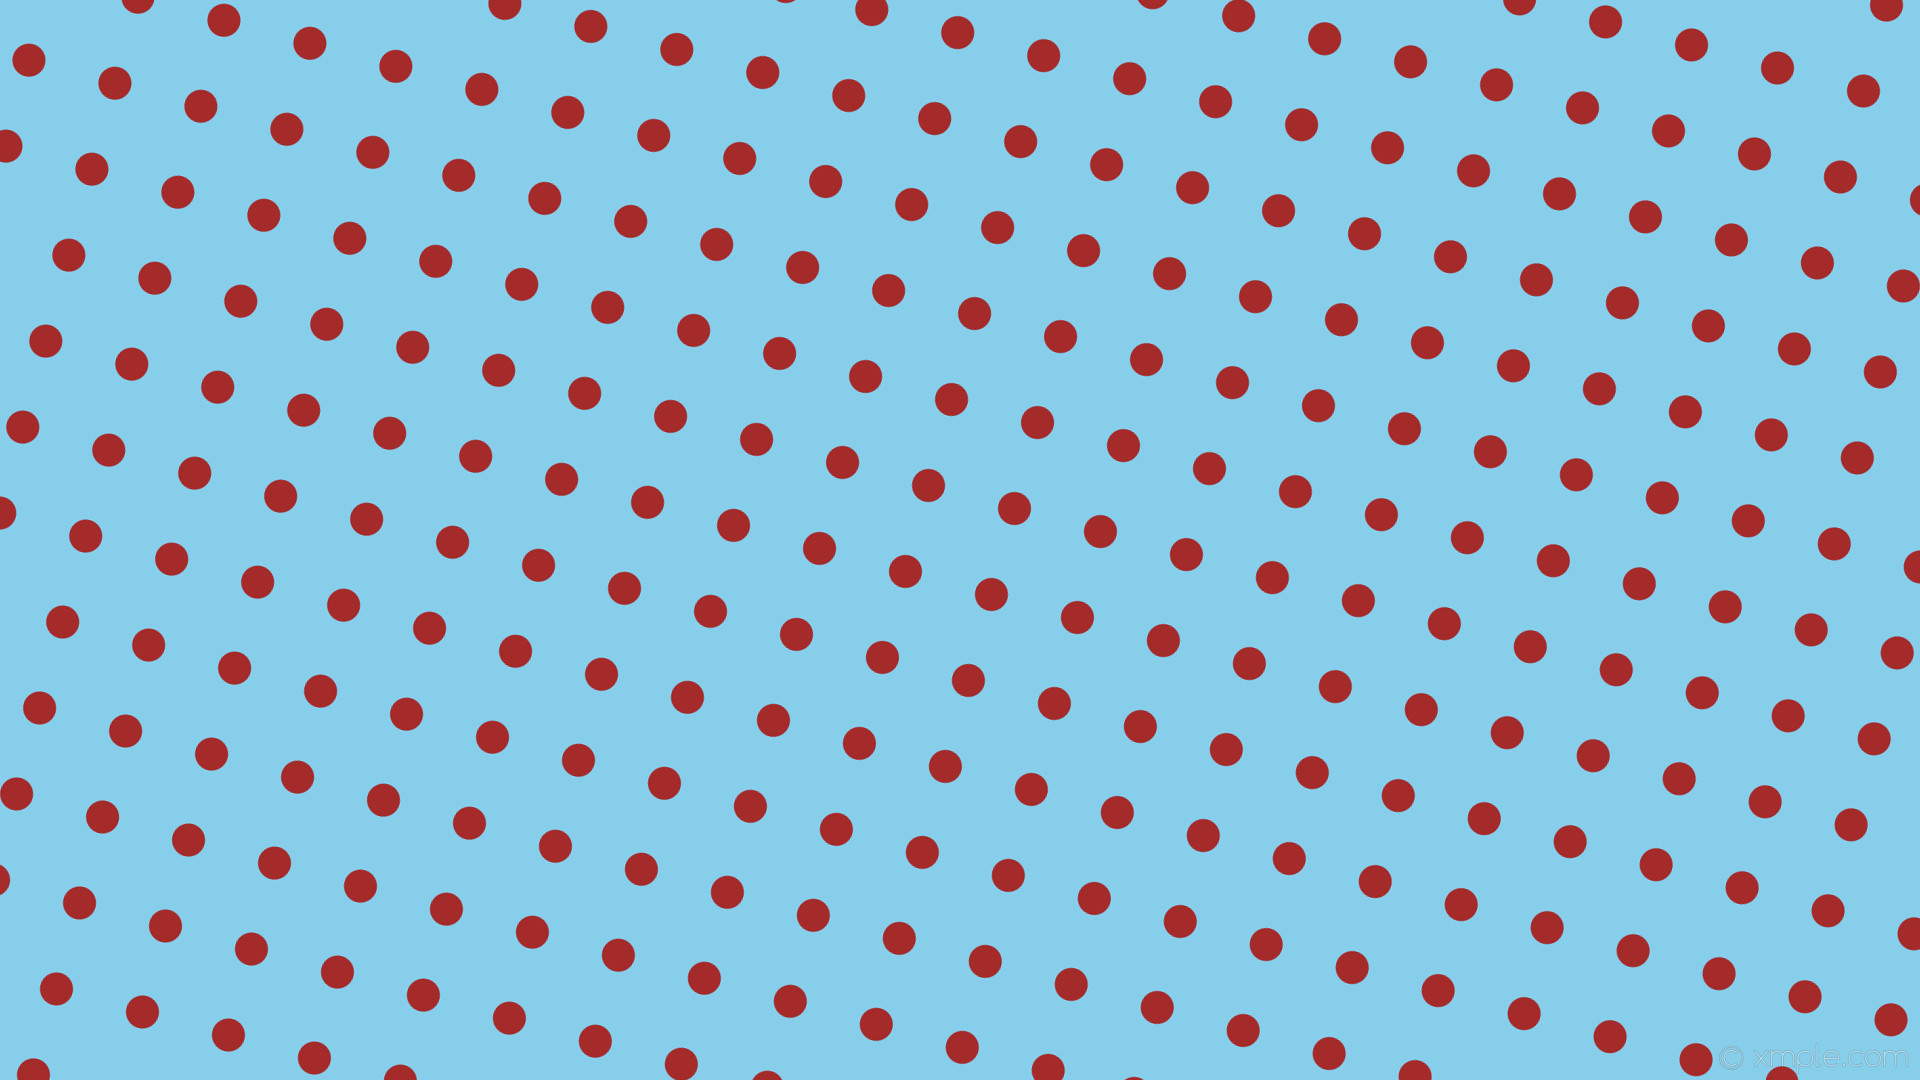 Wallpaper spots polka dots brown blue sky blue ceeb #a52a2a 345 33px 89px